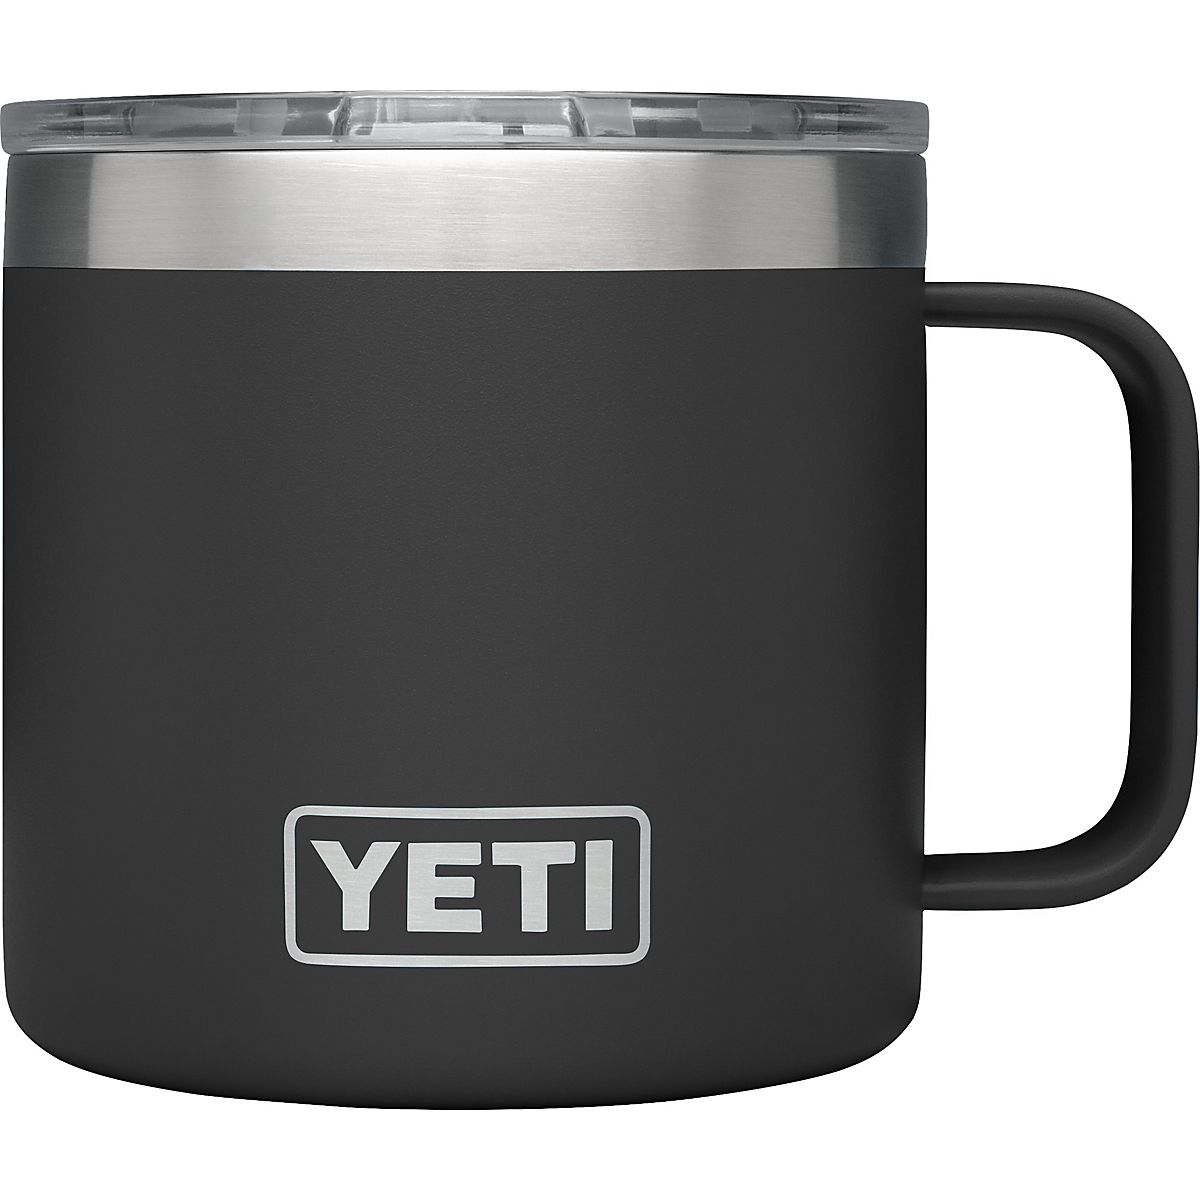 Watch This Before You Buy the YETI Rambler 10 oz Mug 